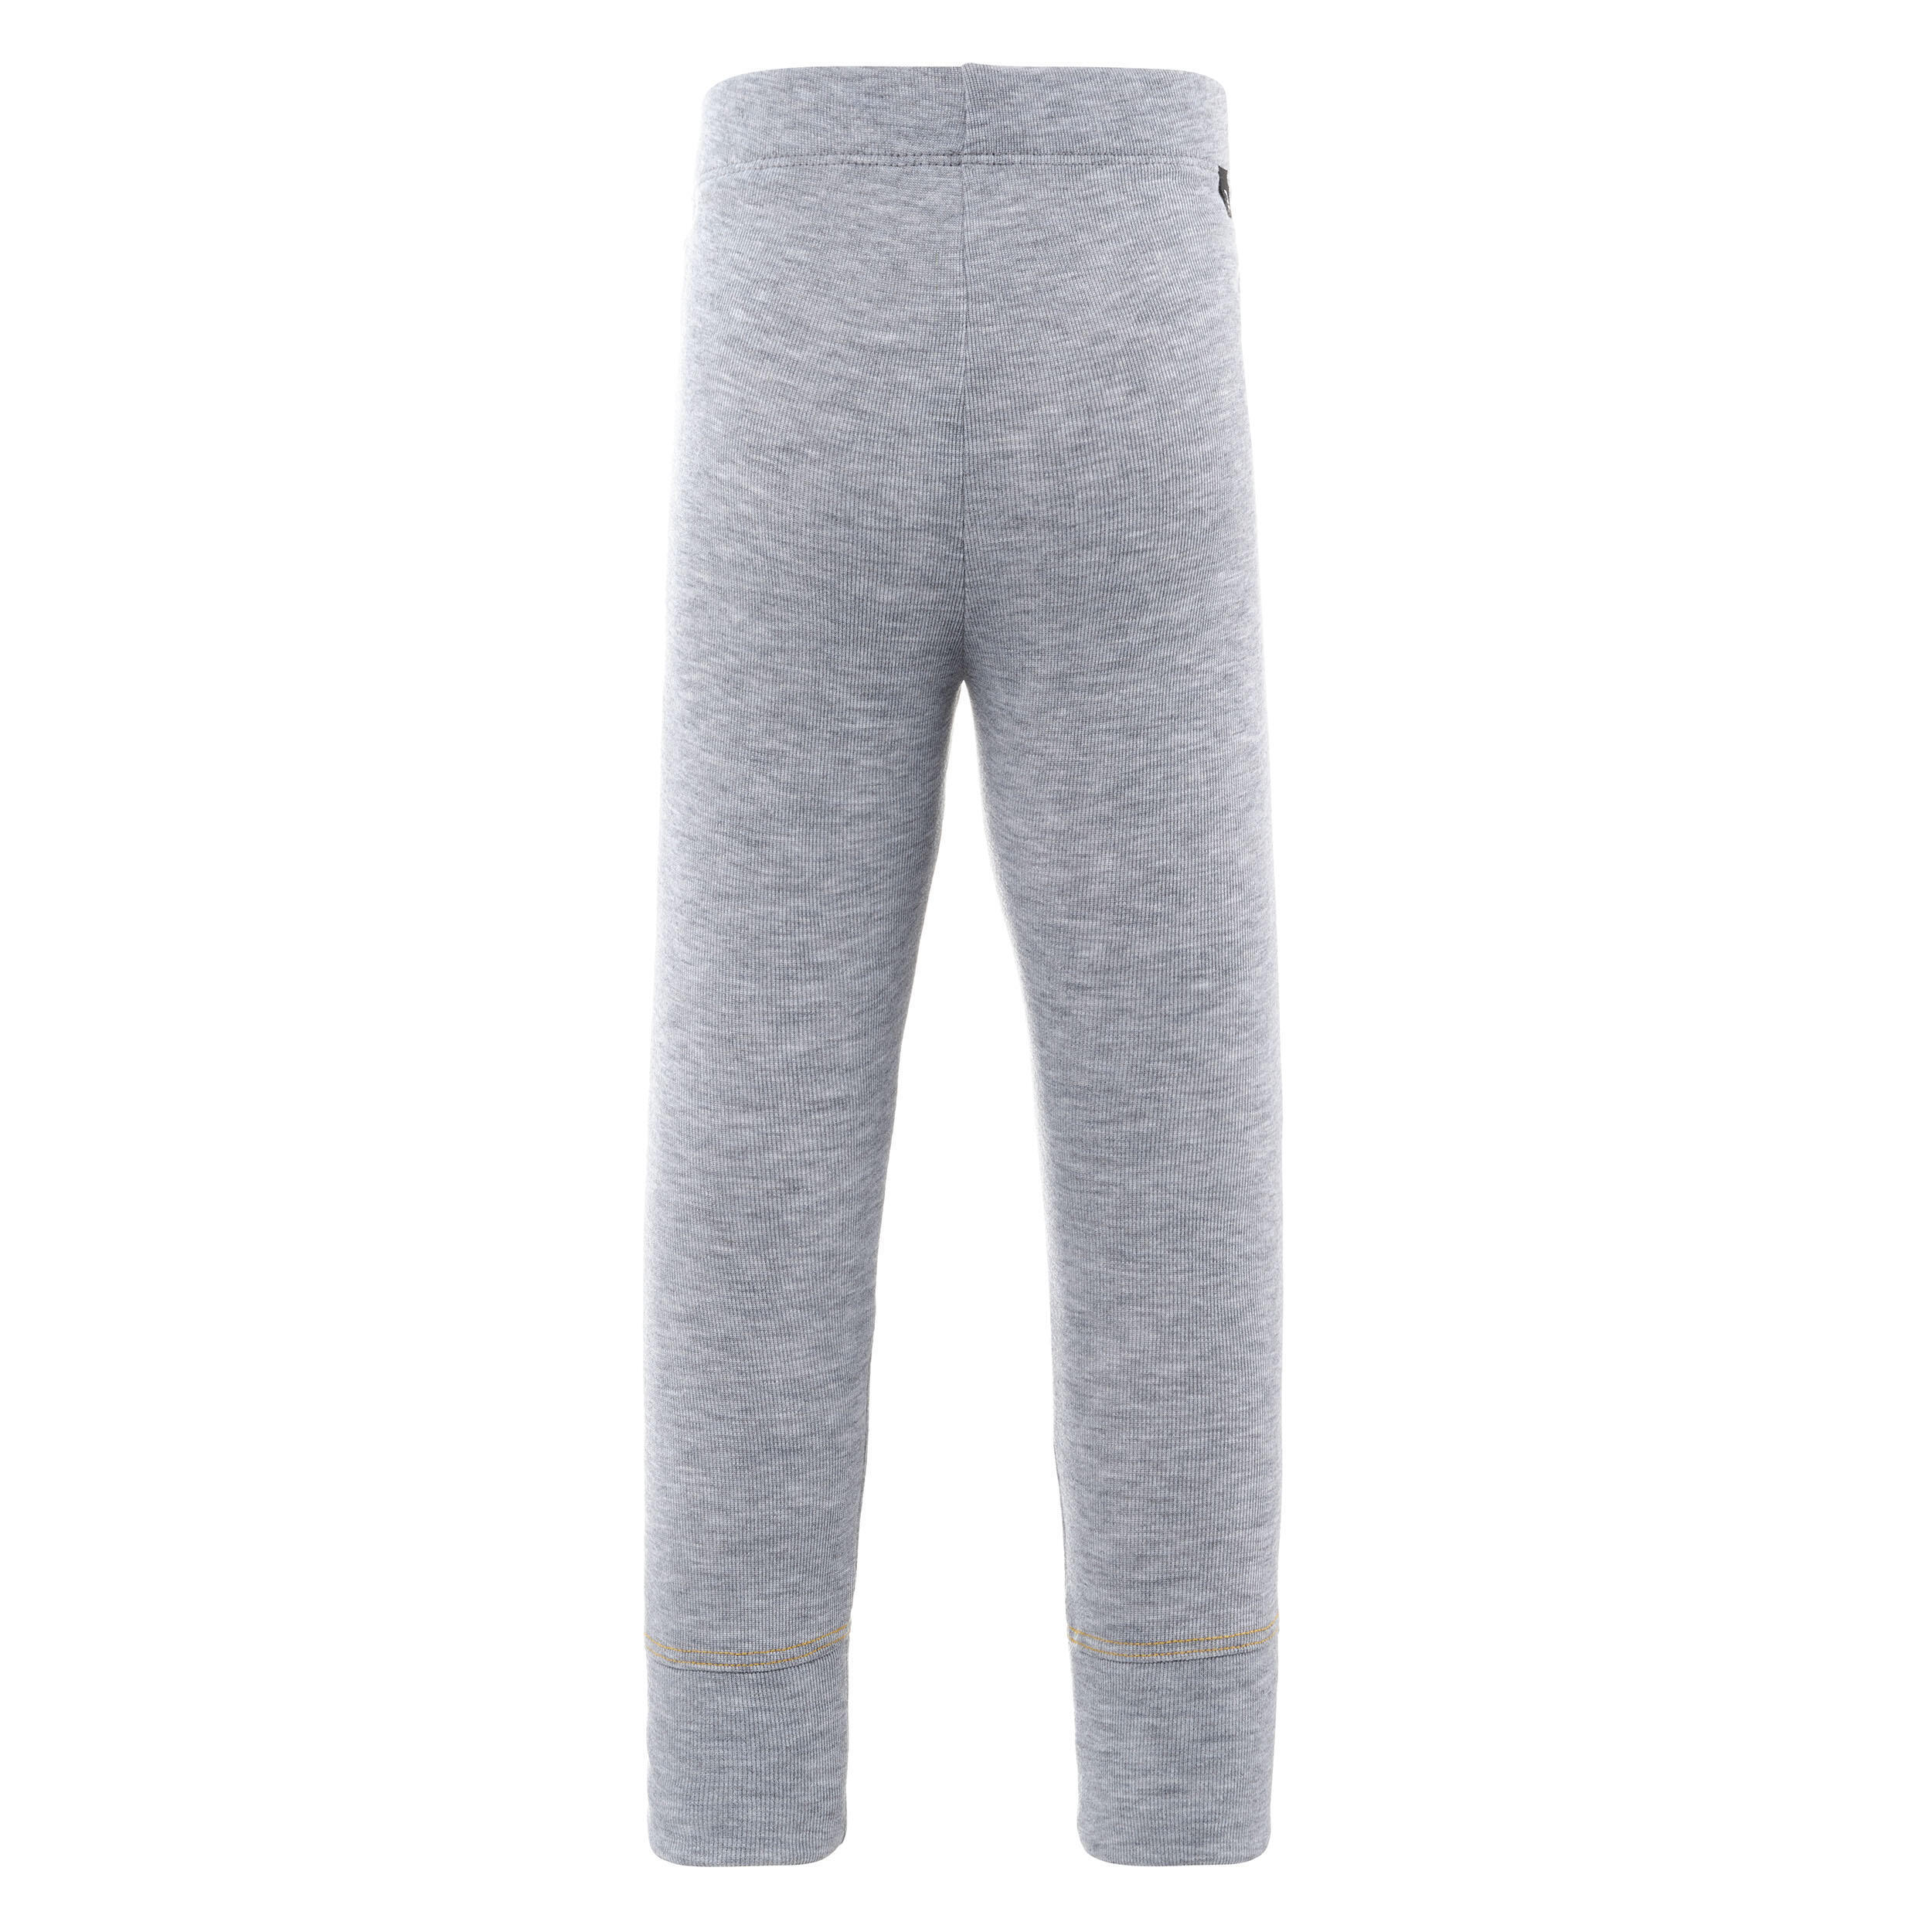 Base layer trousers, Baby ski leggings - WARM grey 6/10